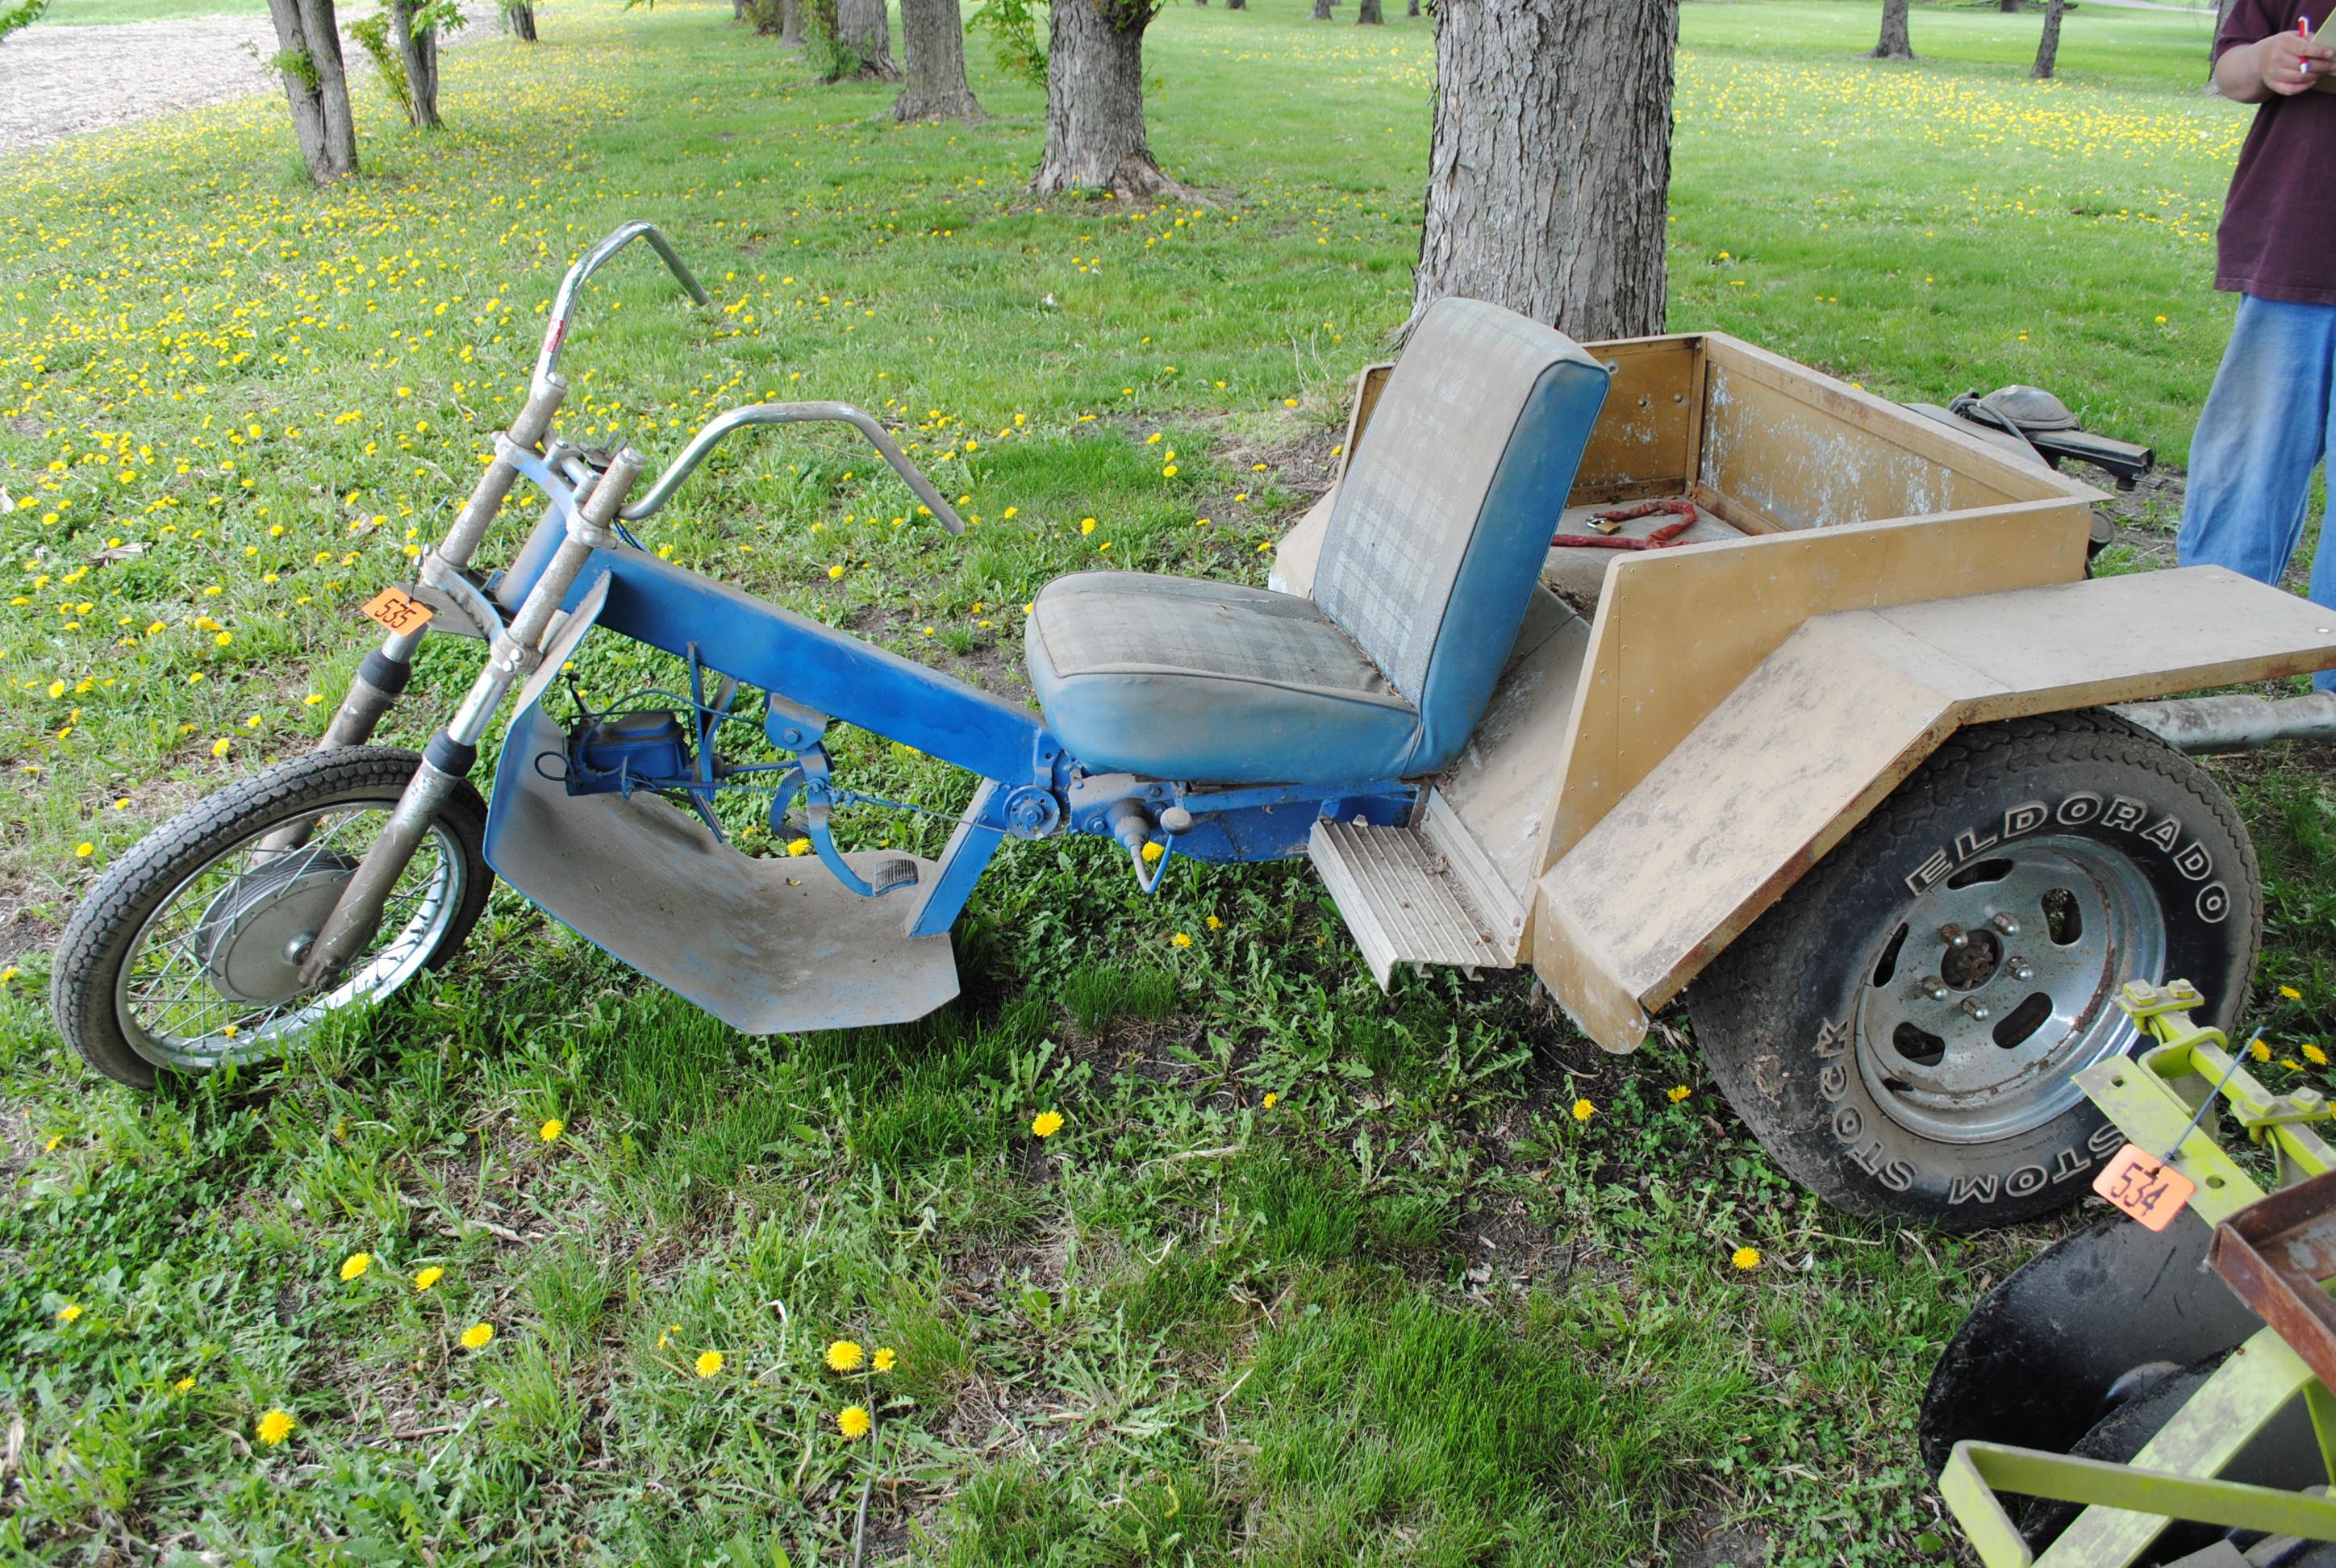 Homemade Trike with Volkswagon motor, not running